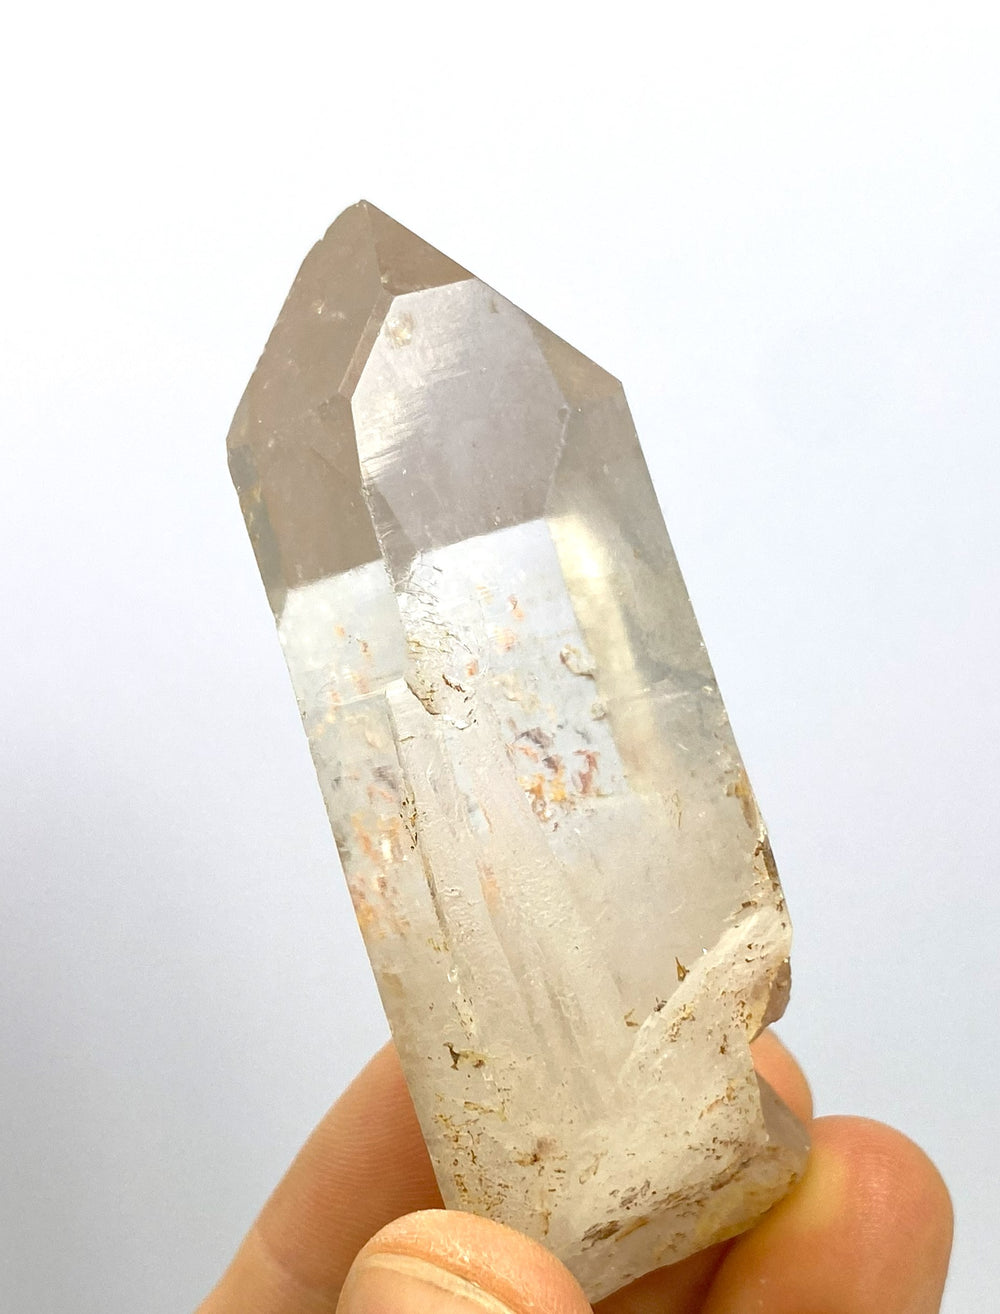 Bergkristalll, Ambatofinandrahana, Provinz Fianarantsoa, Madagaskar